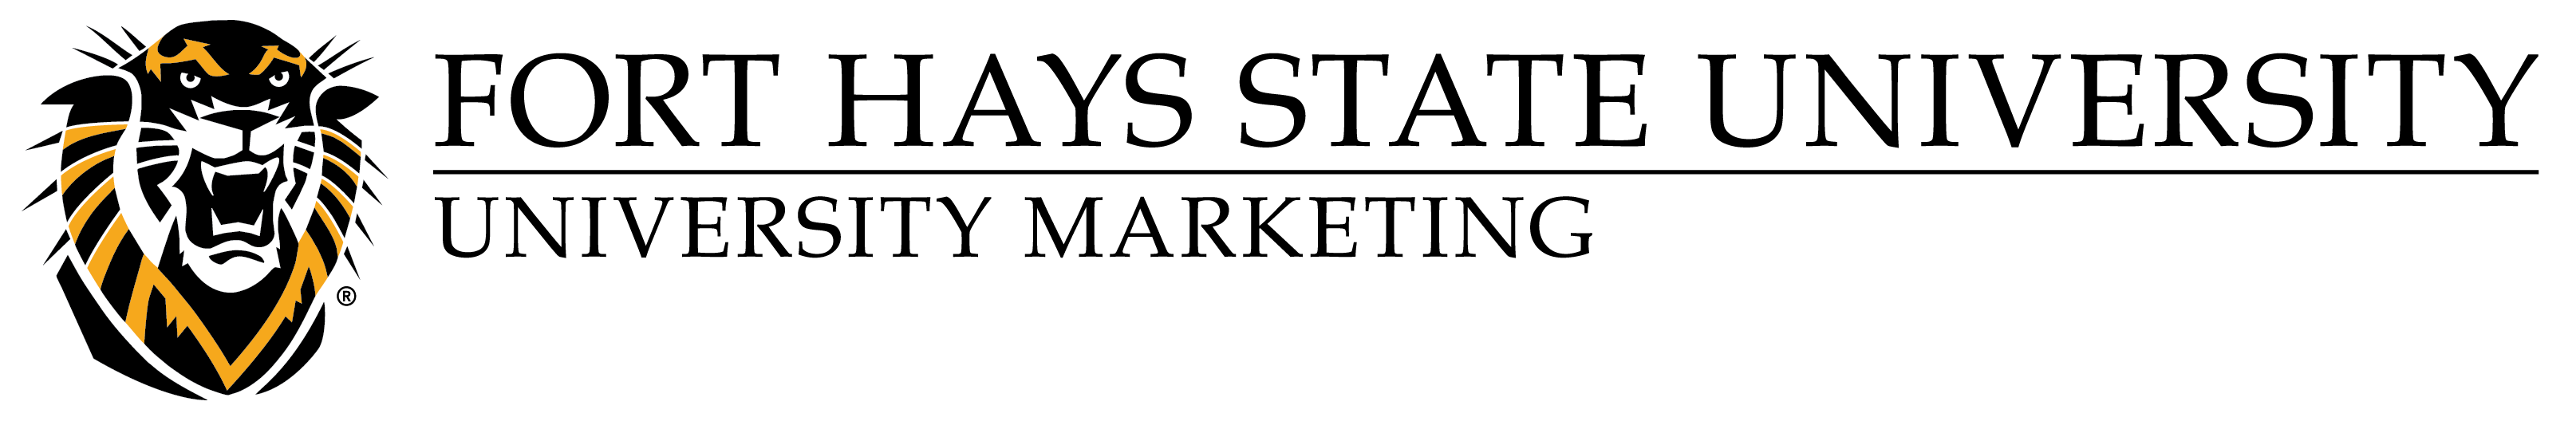 FHSU department logo - 2-color, black text - long